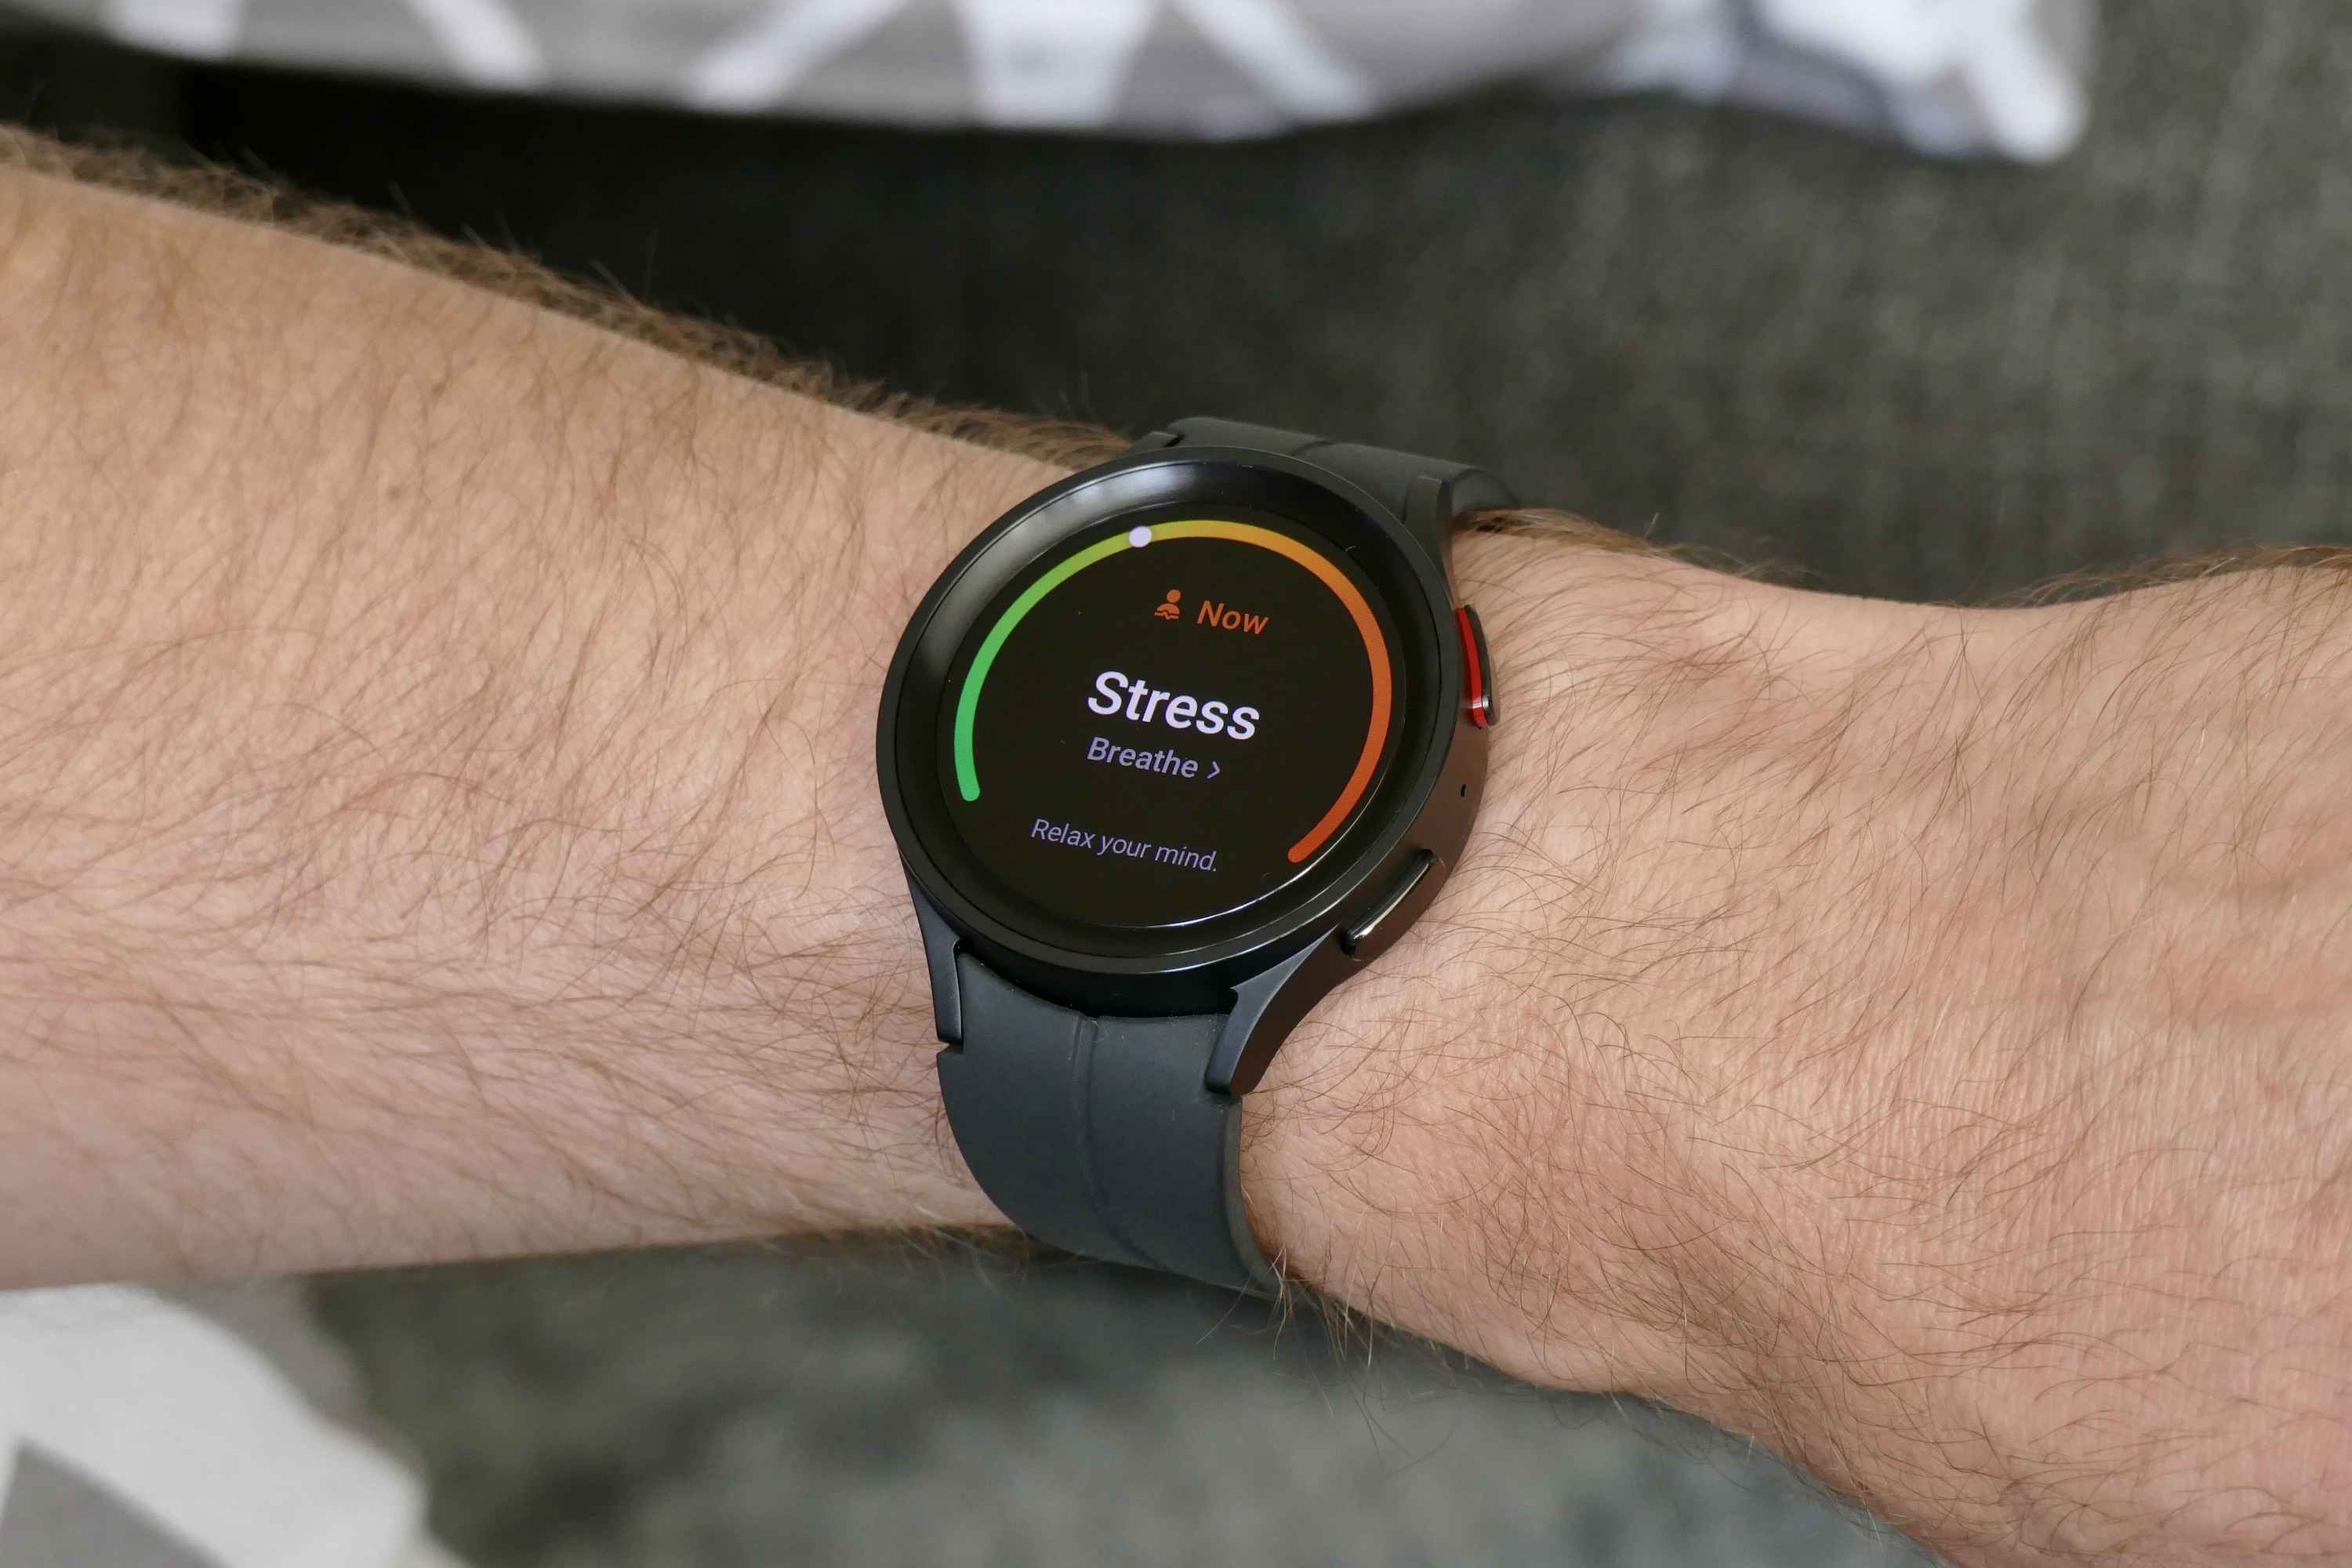 Stress measurement on the Galaxy Watch 5 Pro.